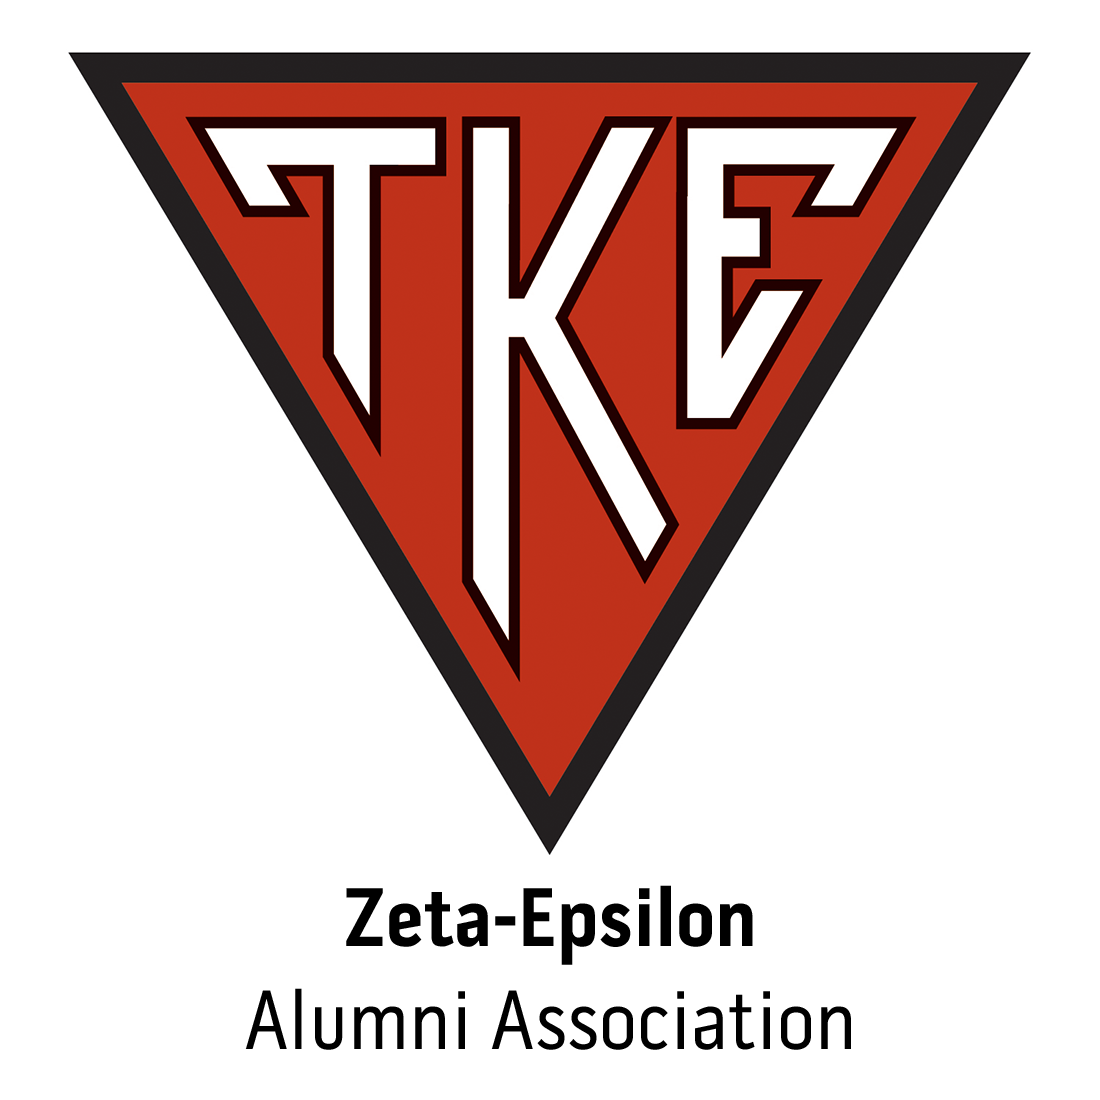 Zeta-Epsilon Alumni Association at Waynesburg University